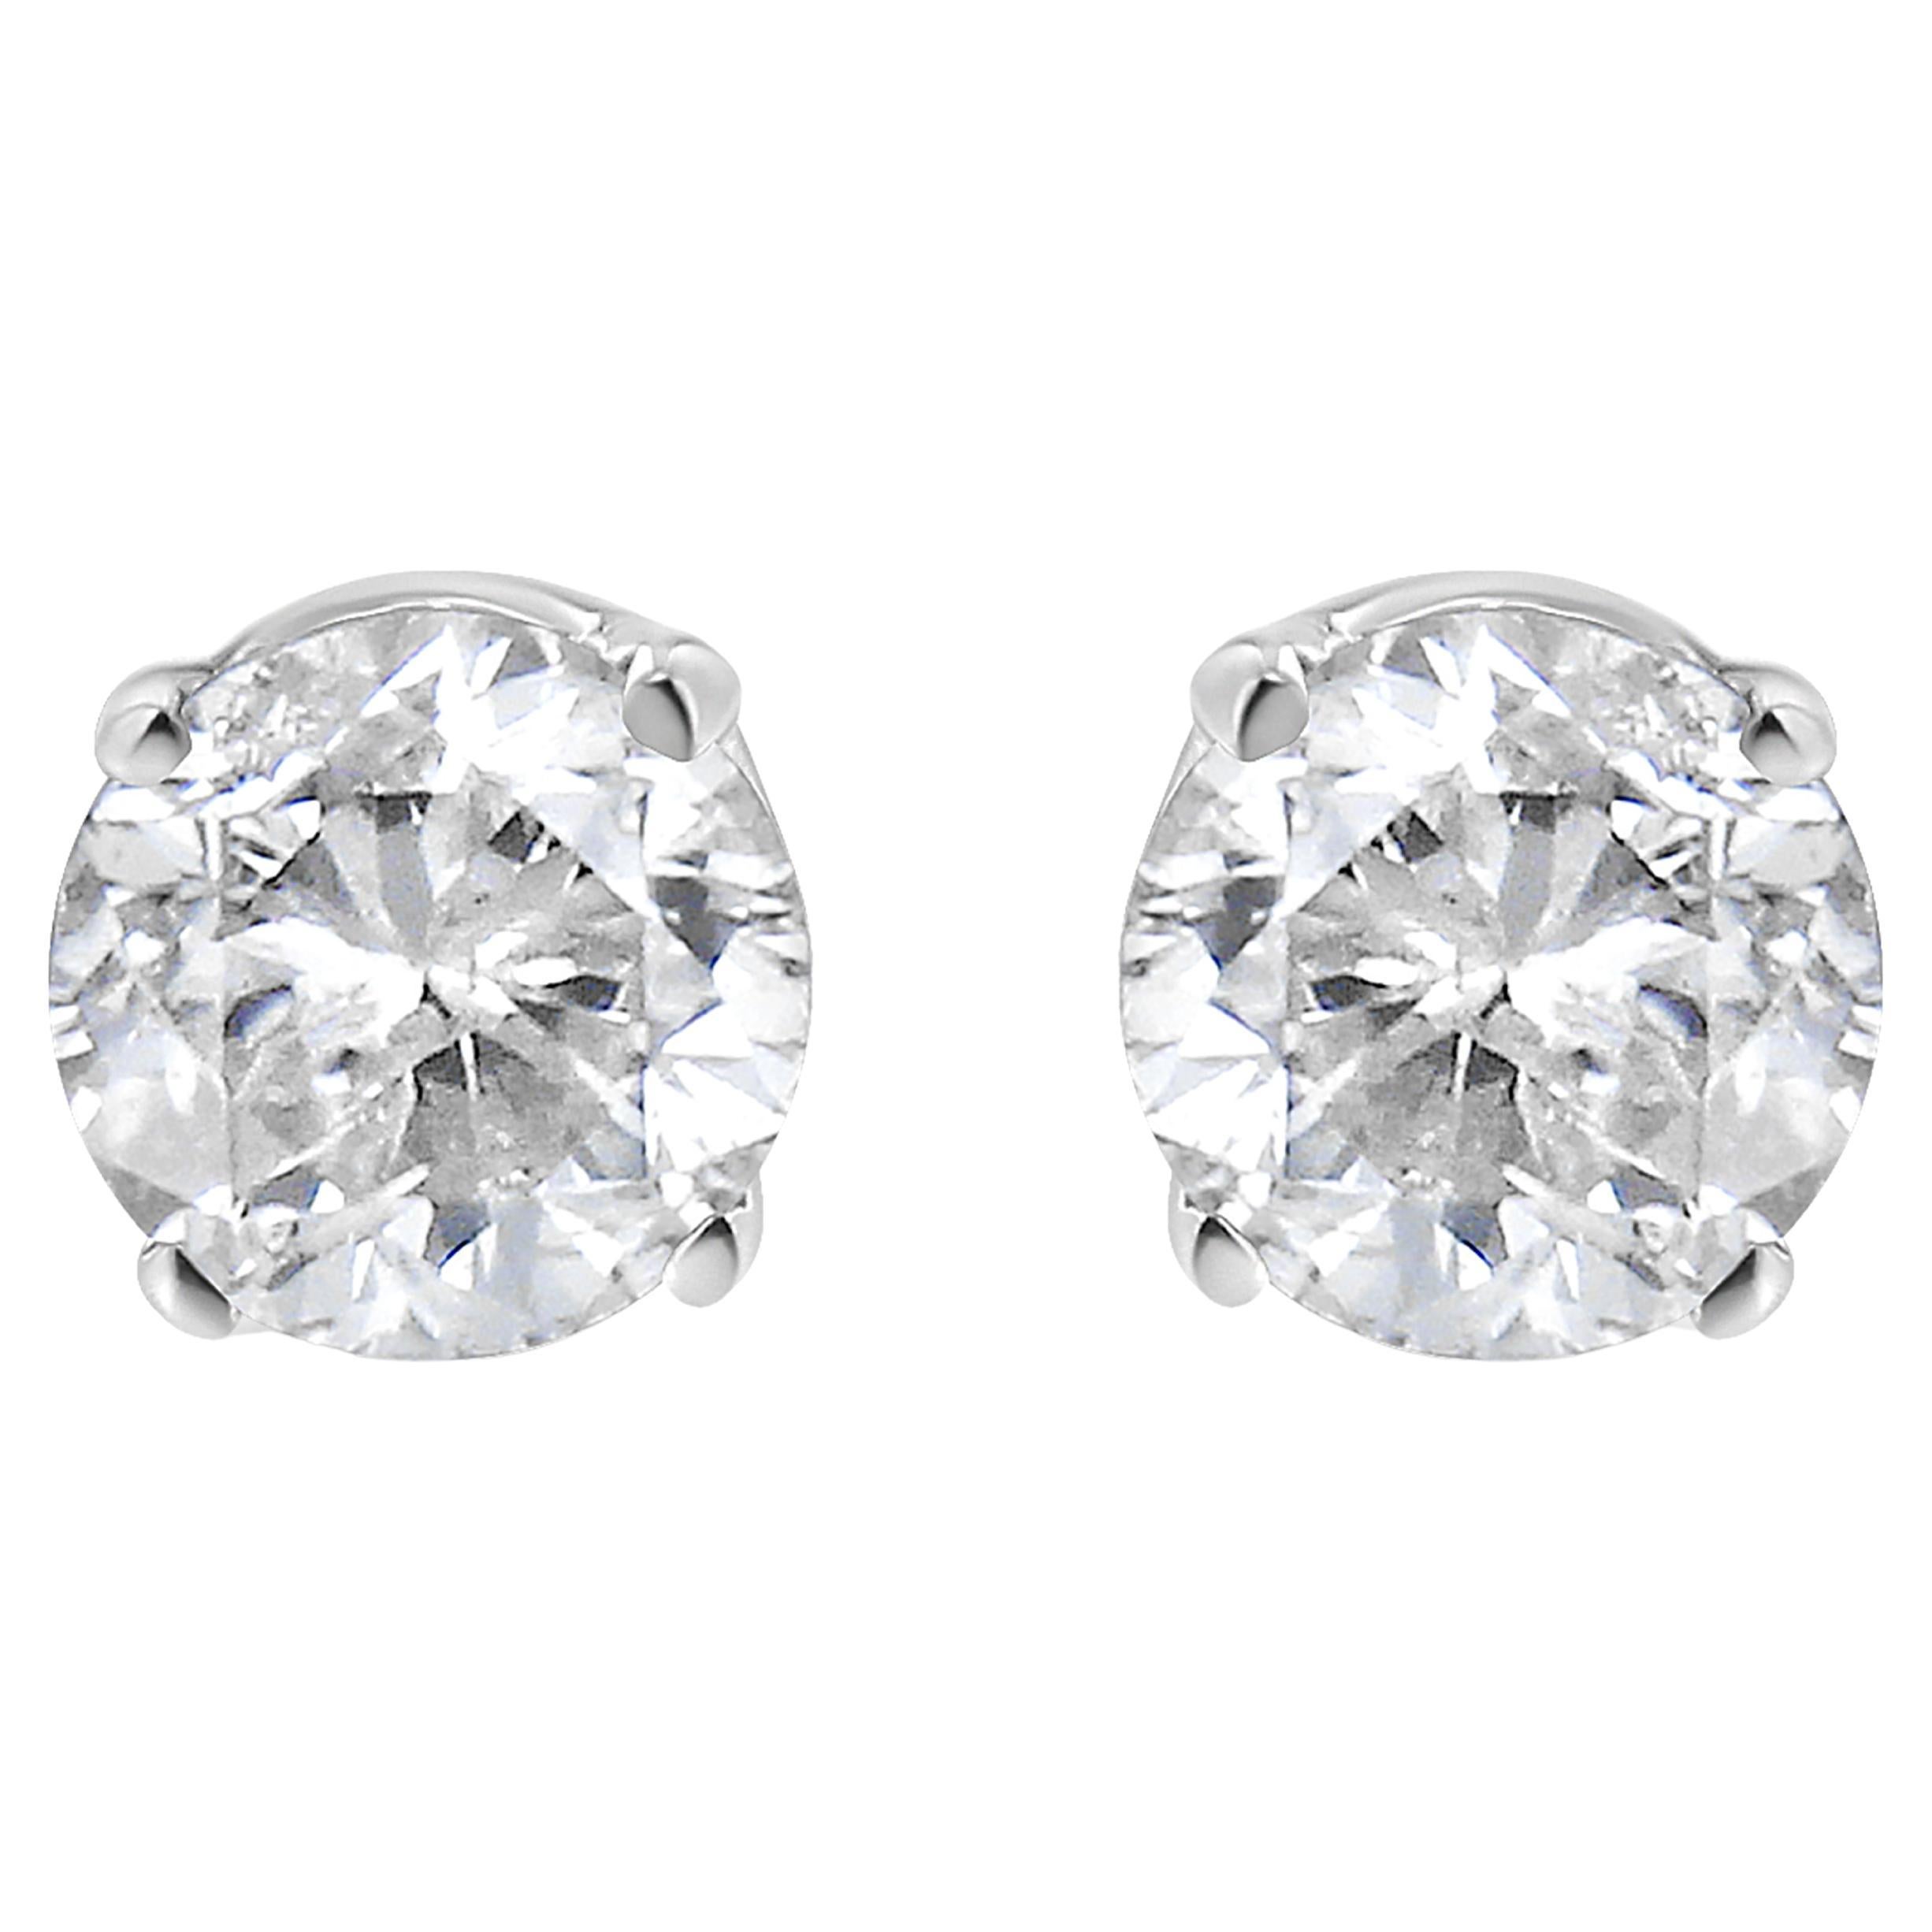 14K White Gold 3/4 Carat Solitaire Diamond Stud Earrings